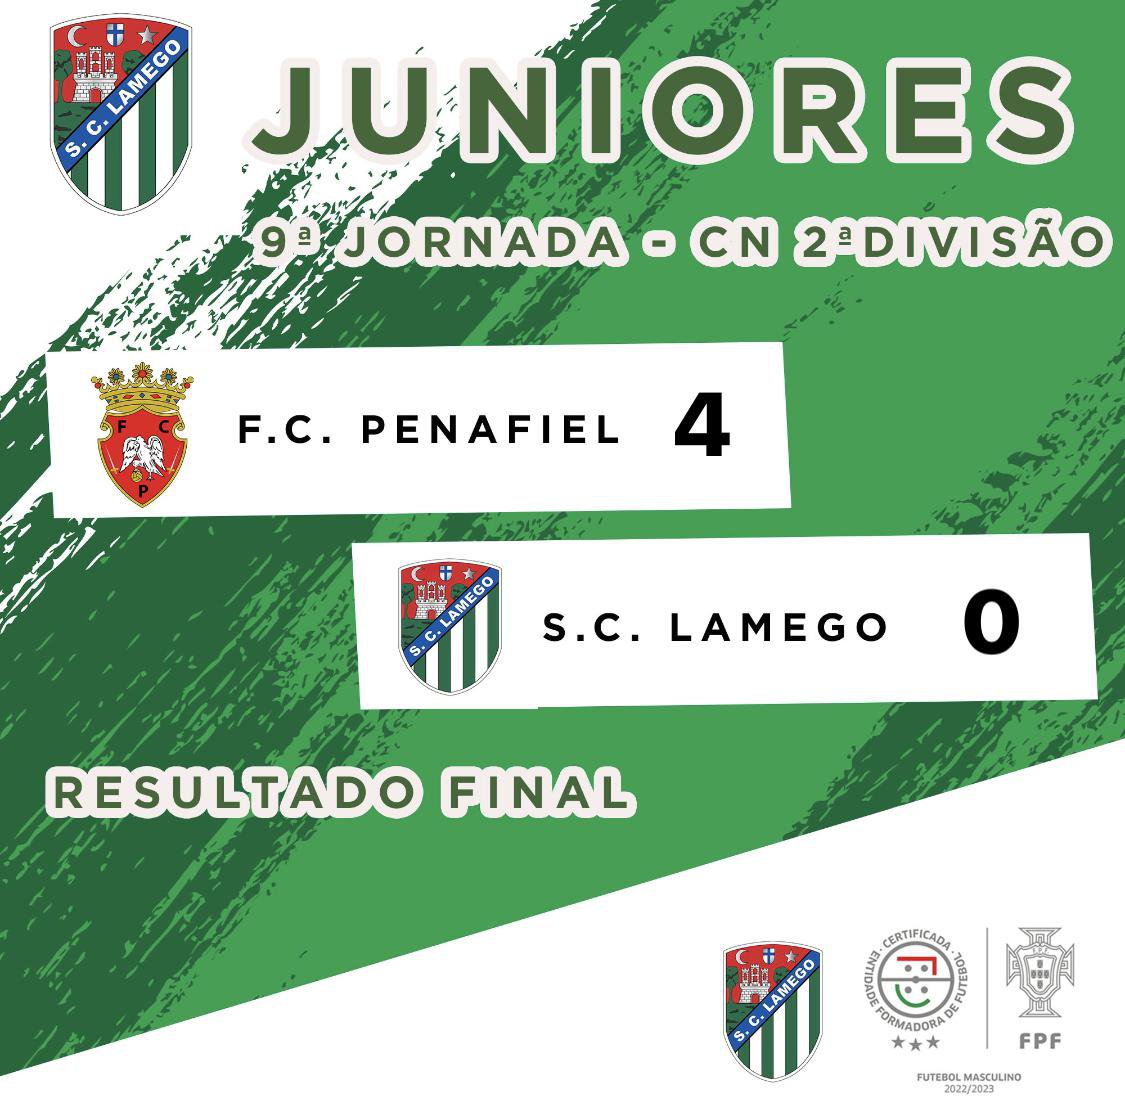 🟢 SC Lamego - Juniores - 9 Jornada ⚪